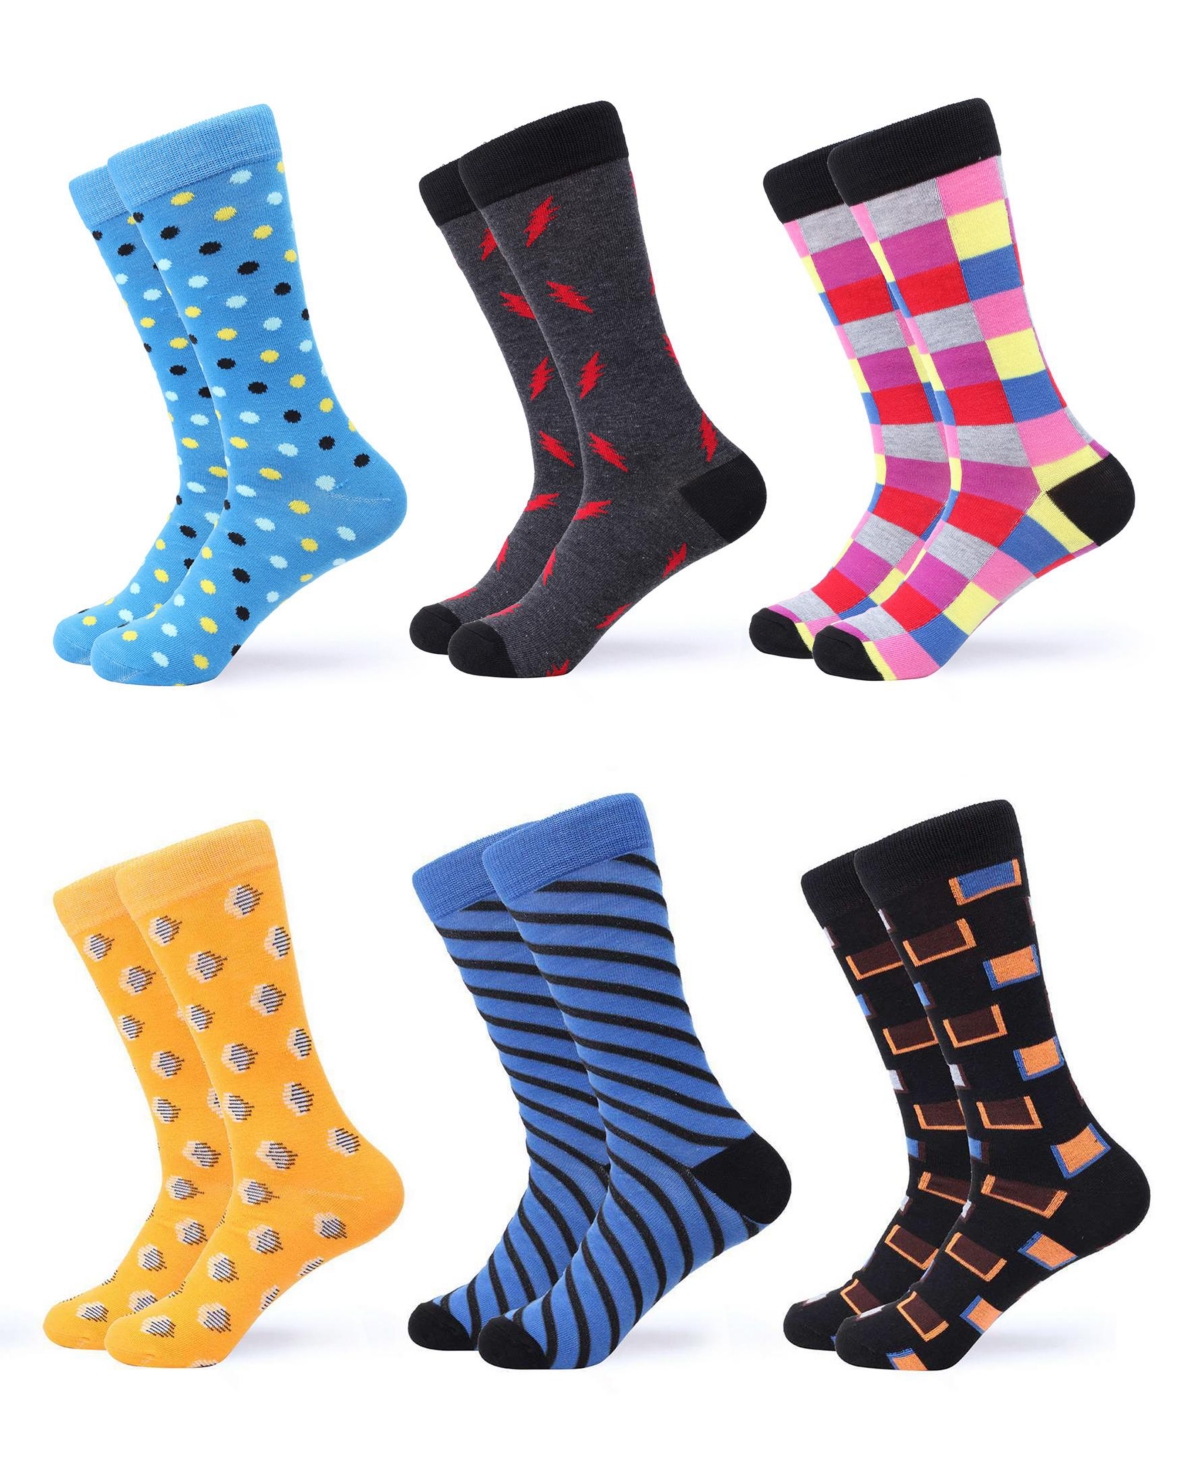 Men's Funky Colorful Dress Socks 6 Pack - Cool tones